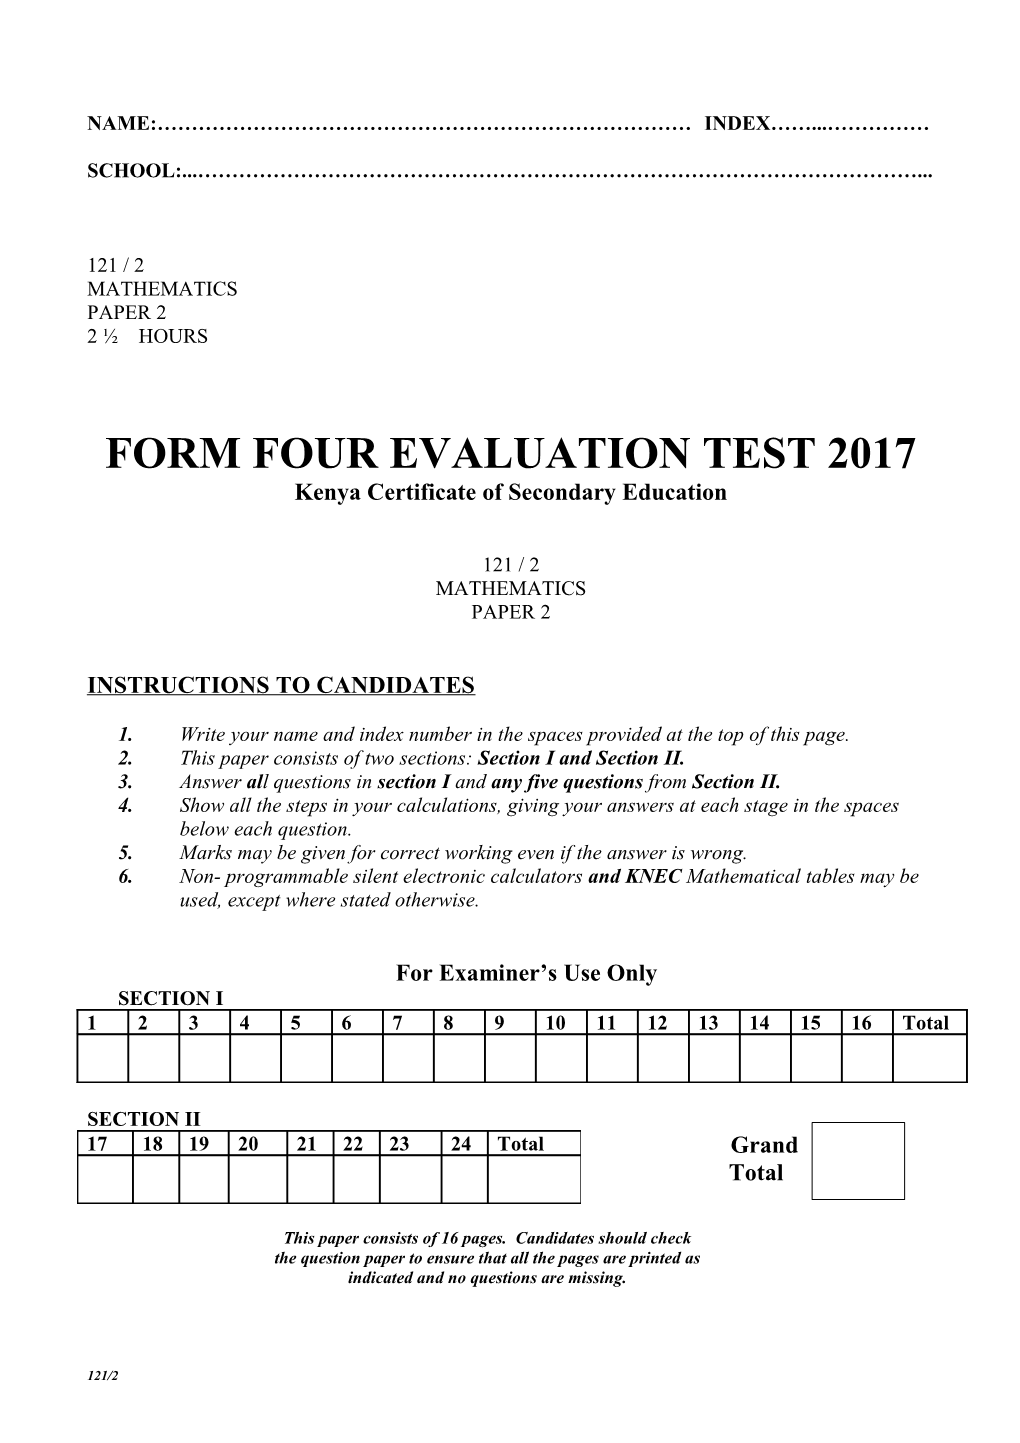 Form Four Evaluation